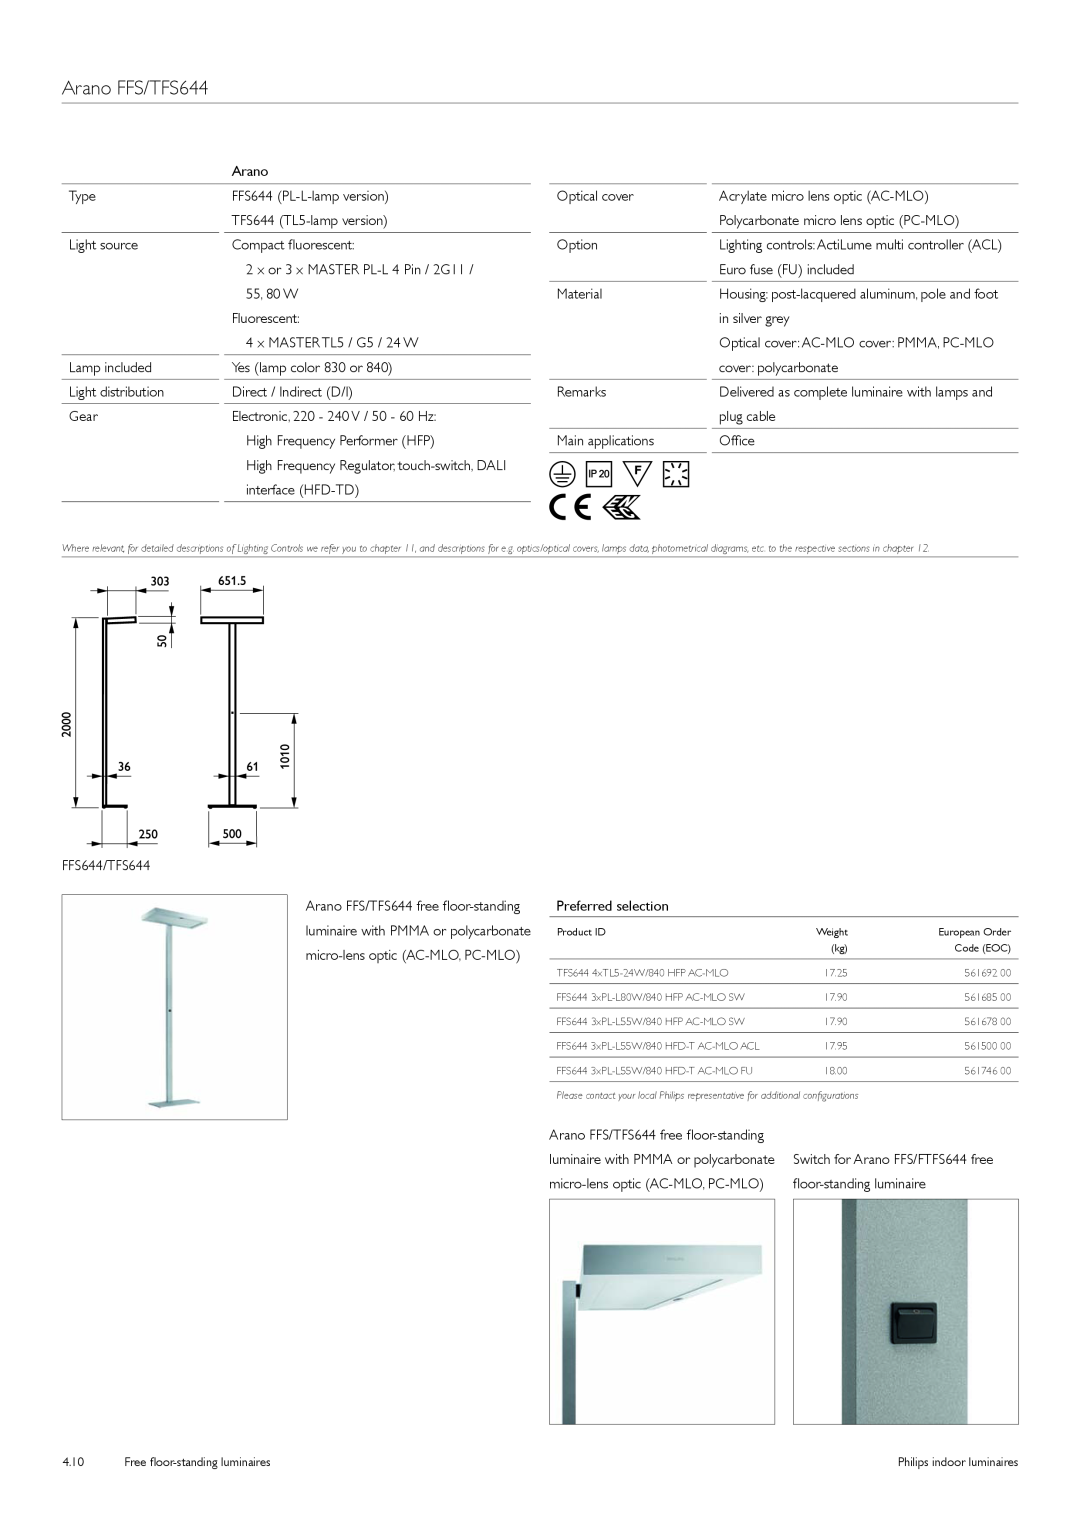 Philips Free Floor-Standing Luminaires manual Arano FFS/TFS644 